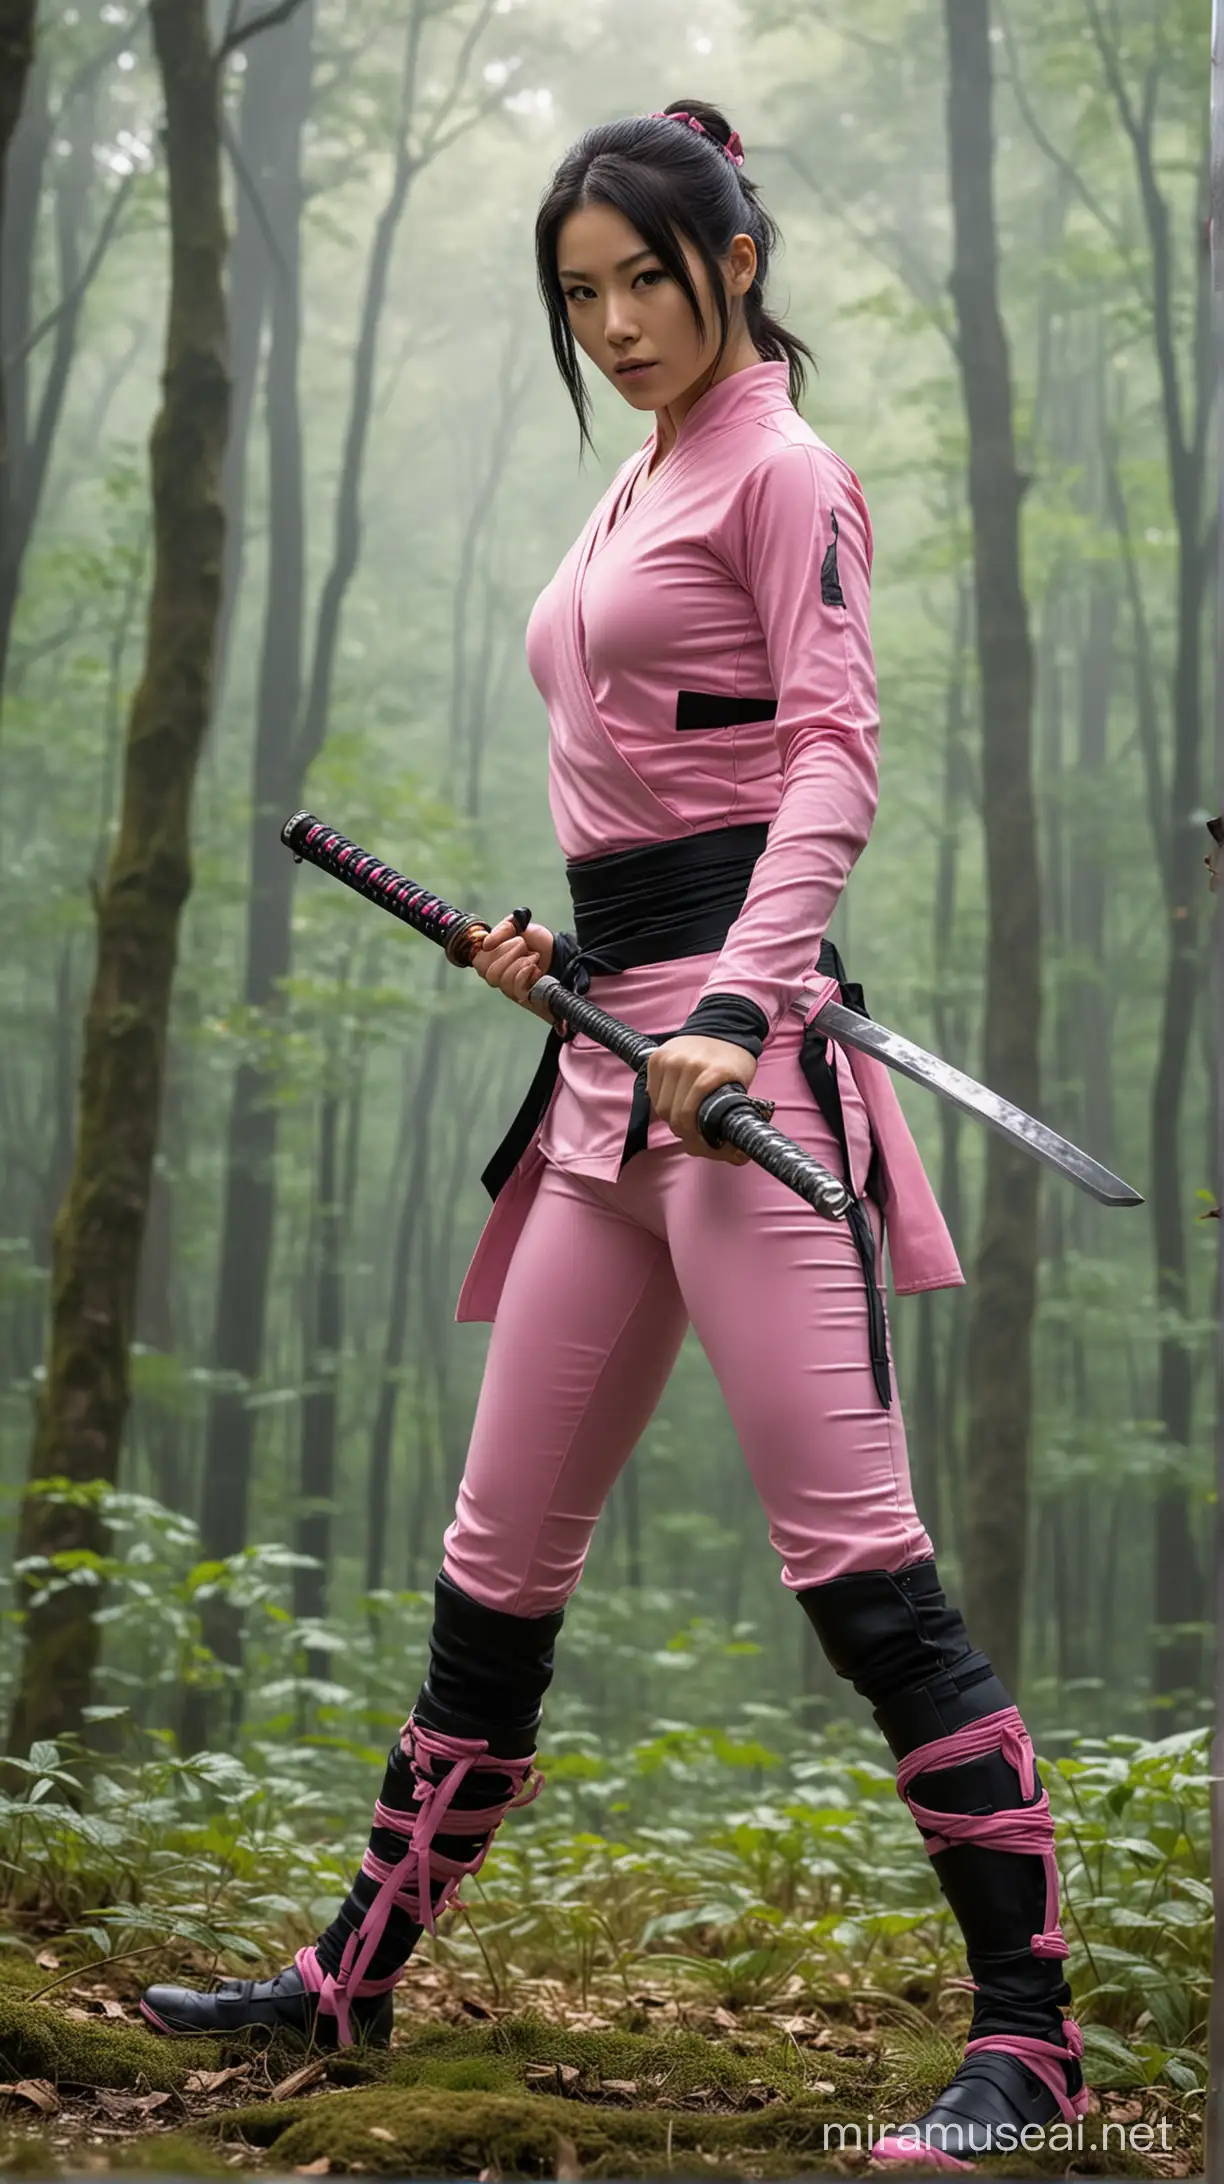 Beautiful Female Ninja in Pink Costume with Katana Sword in Serene Forest Setting